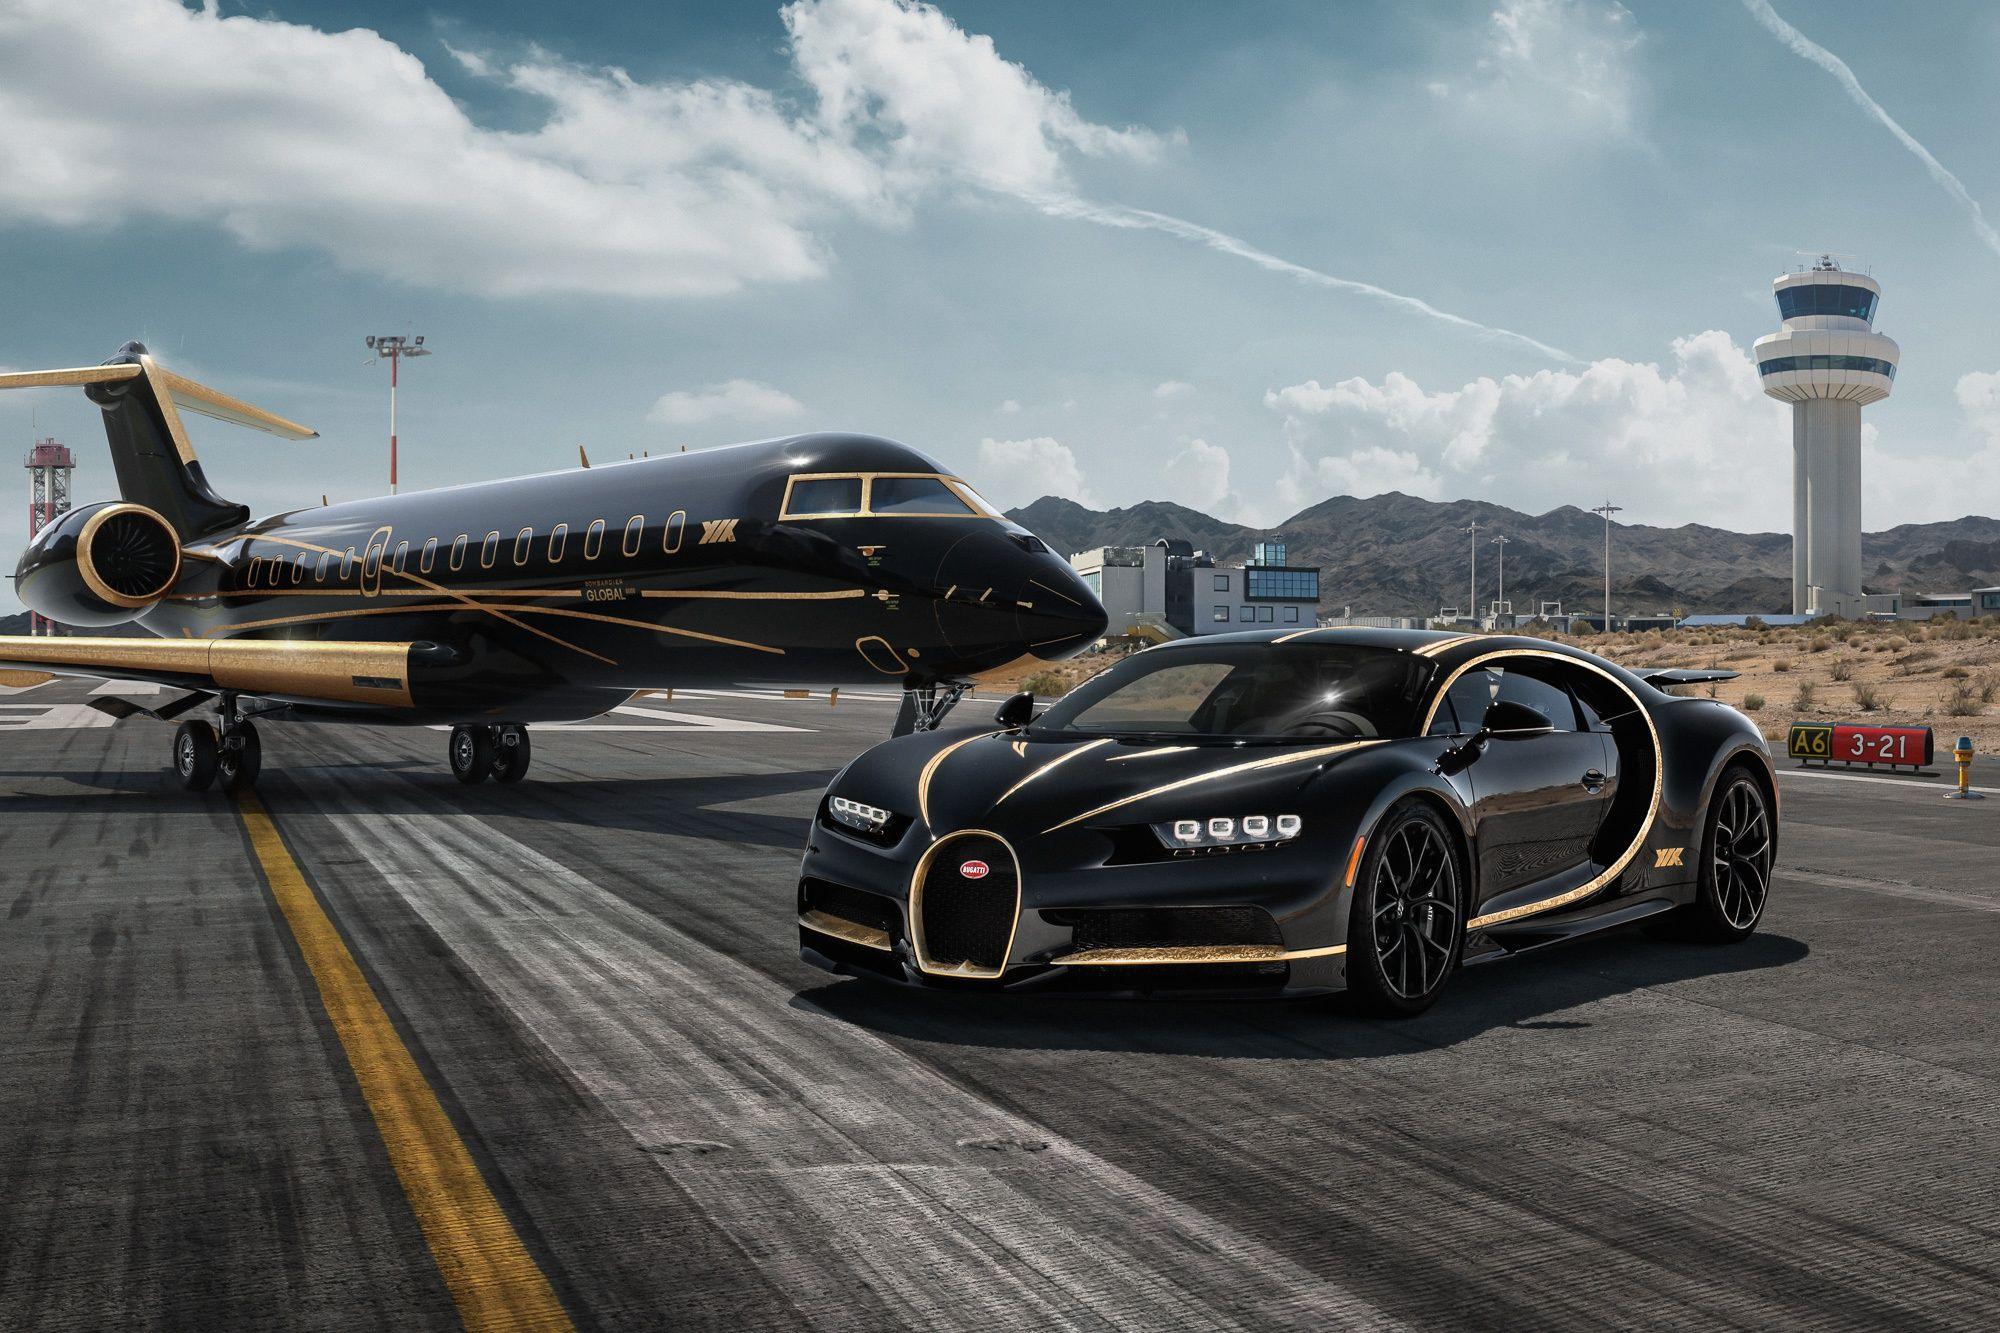 Bugatti Chiron Black, Gold, Aircraft, Supercar, Luxury